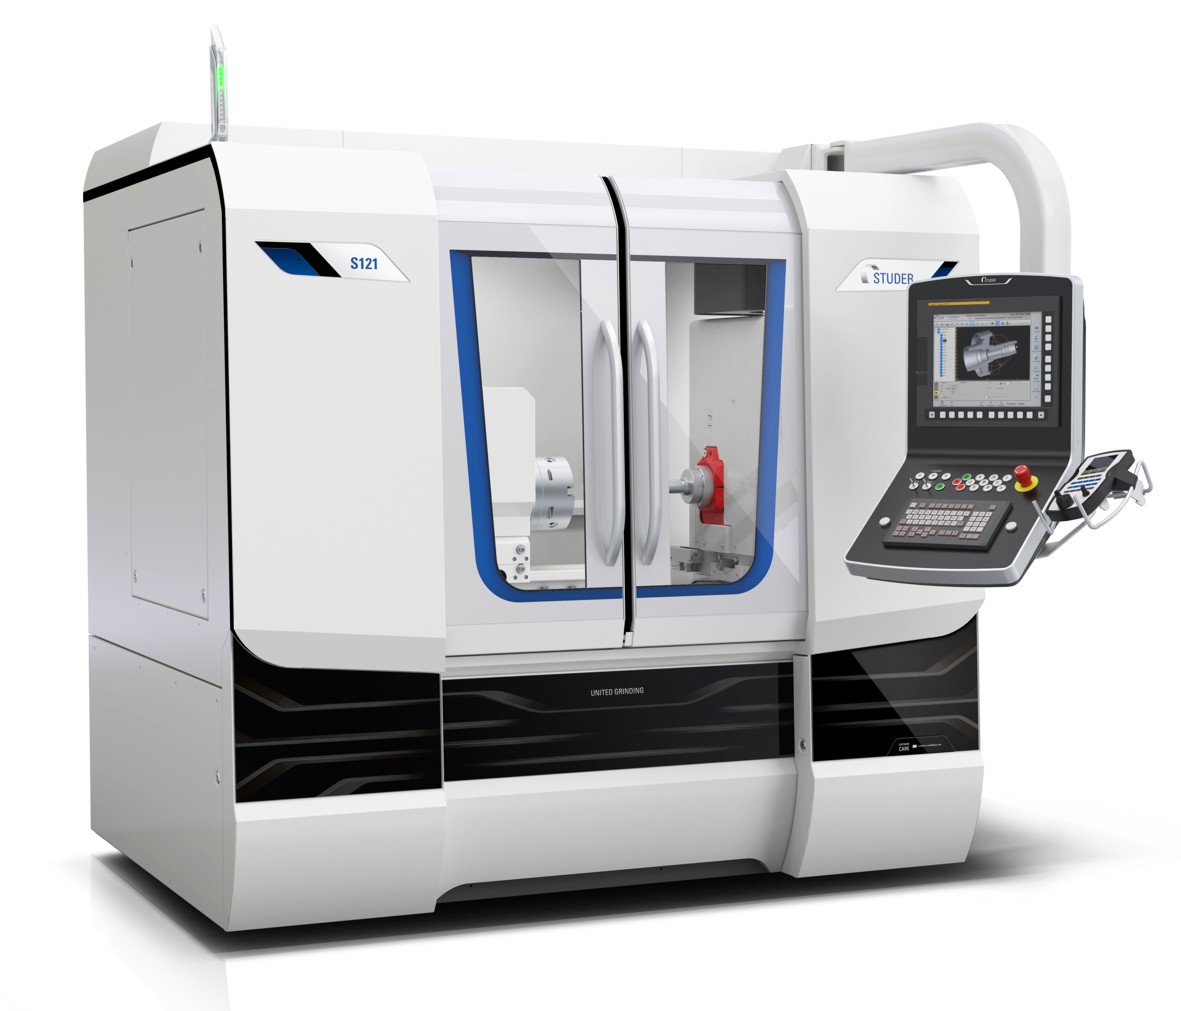 Studer S121 CNC Internal Grinding Machine for diverse internal grinding applications